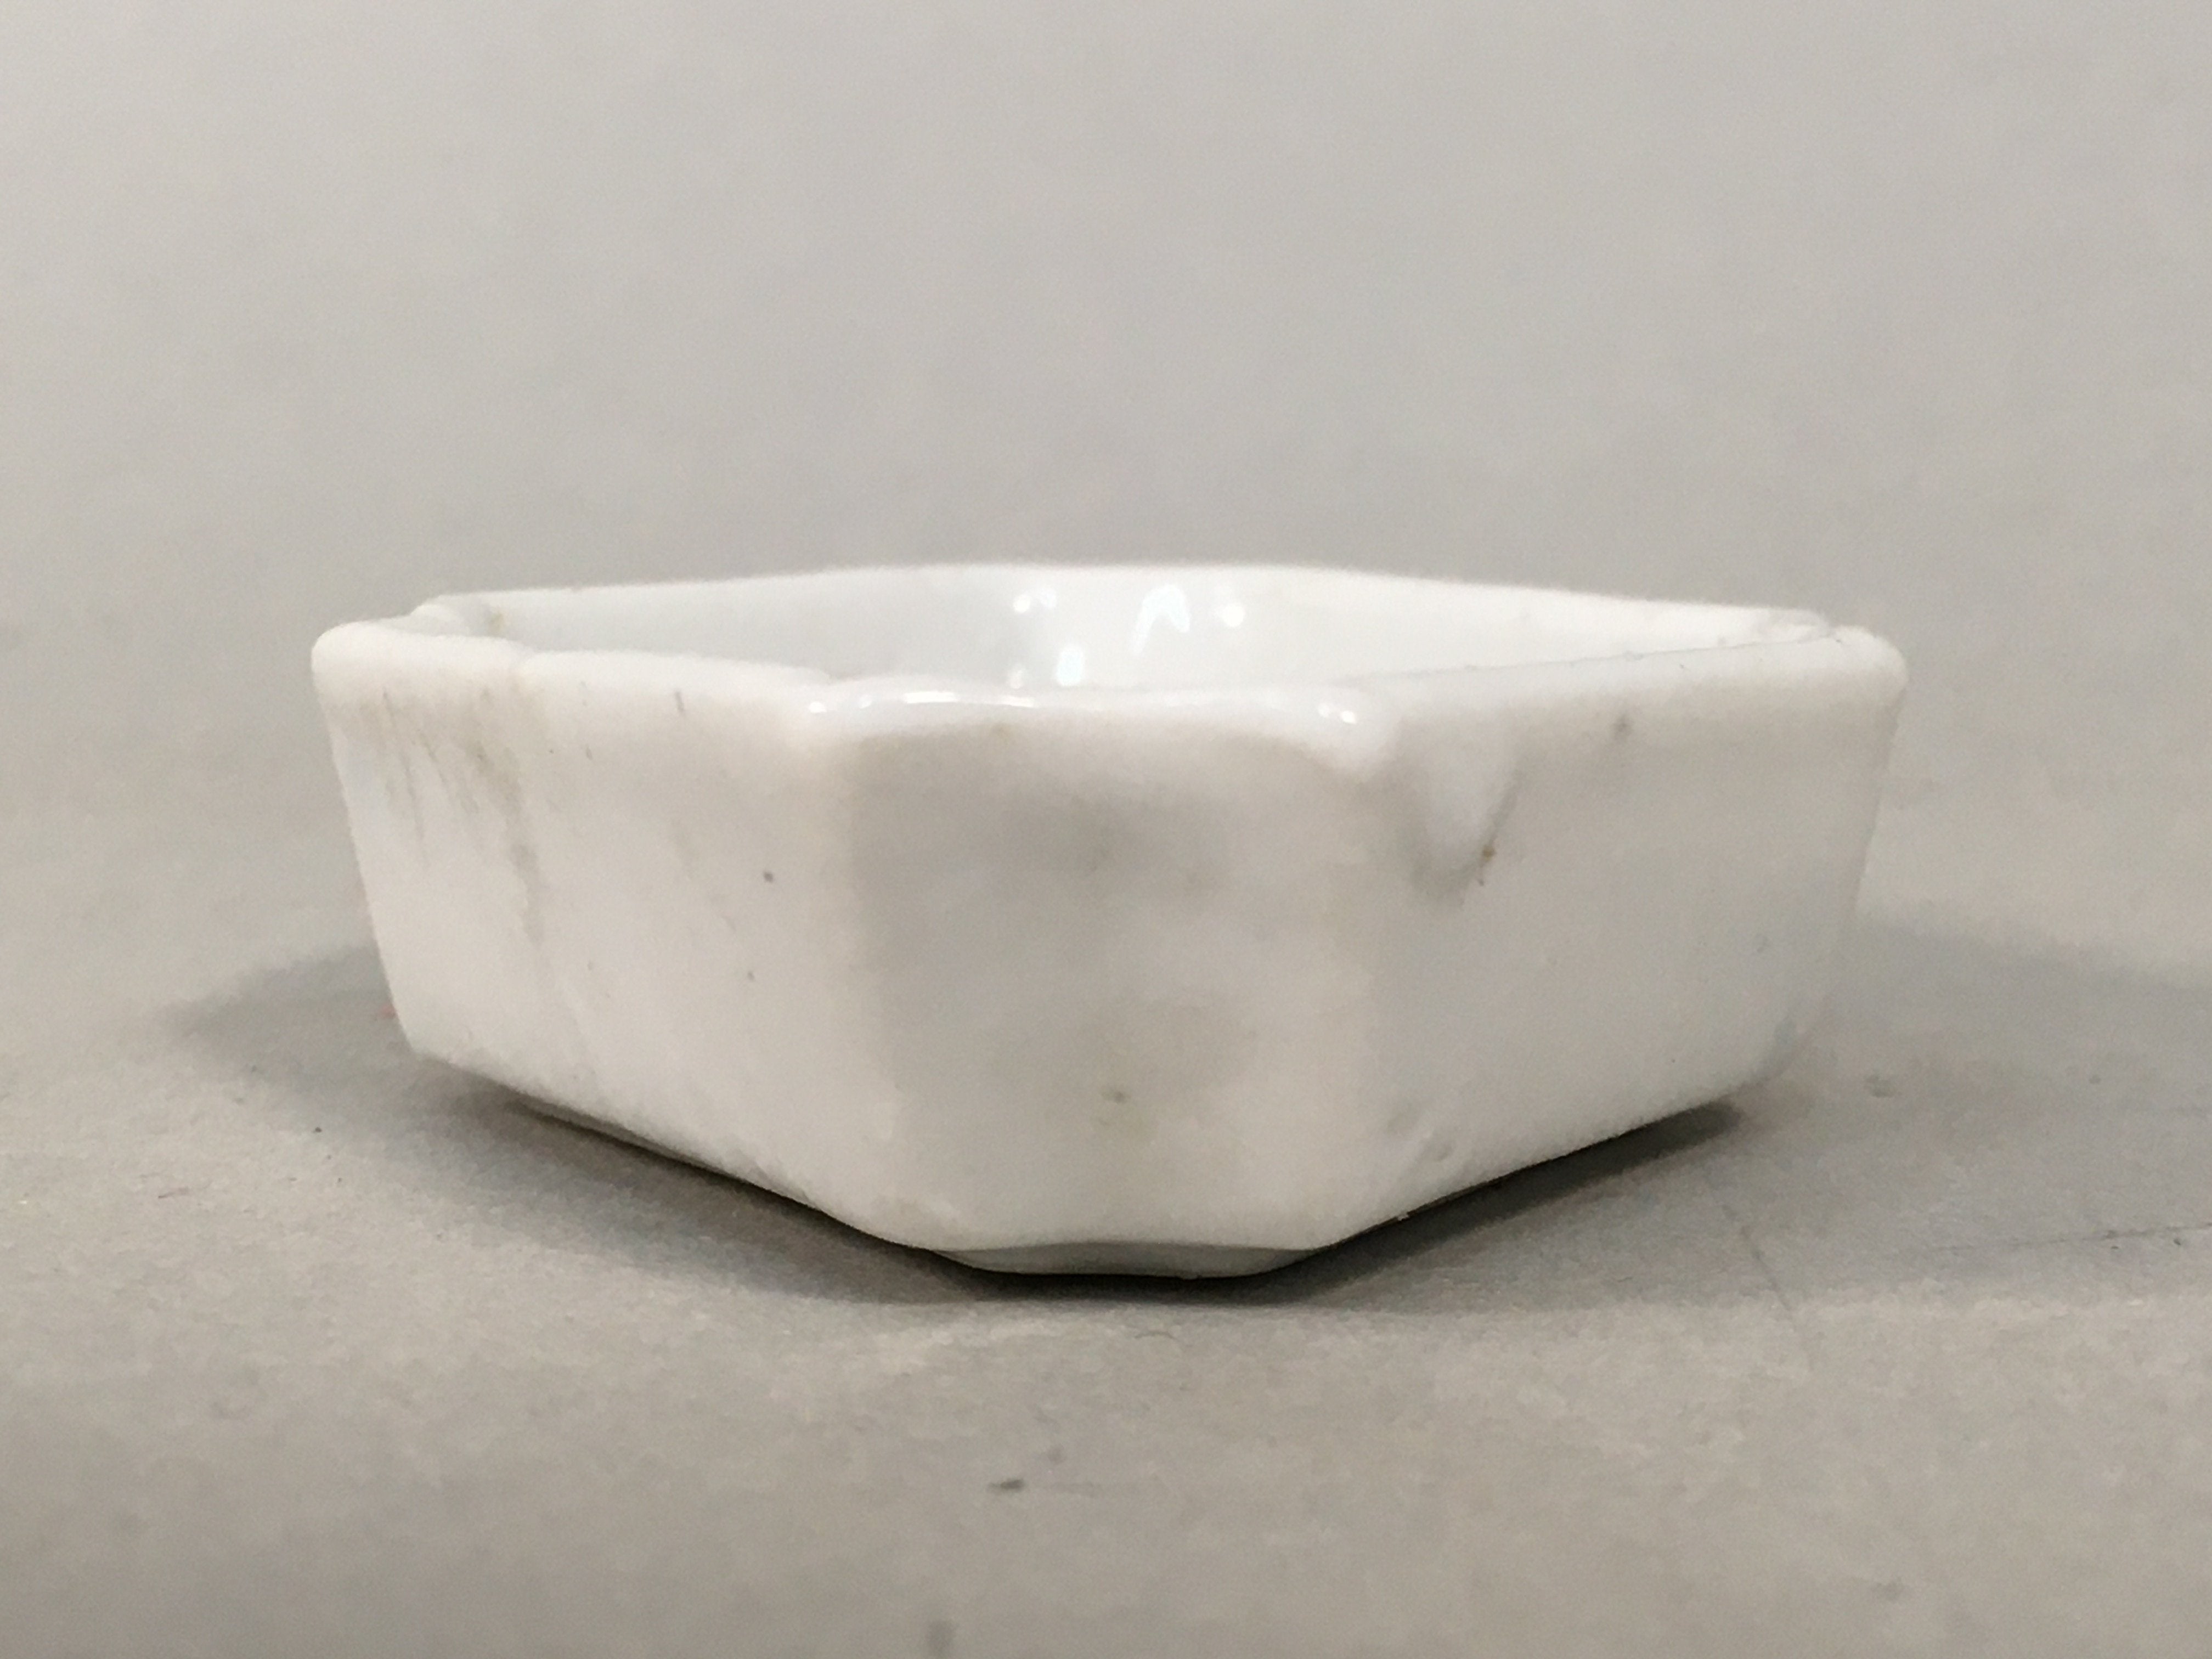 Japanese Porcelain Small Bowl Vtg Kozara Diamond Soy Sauce Dipping Dish PP433